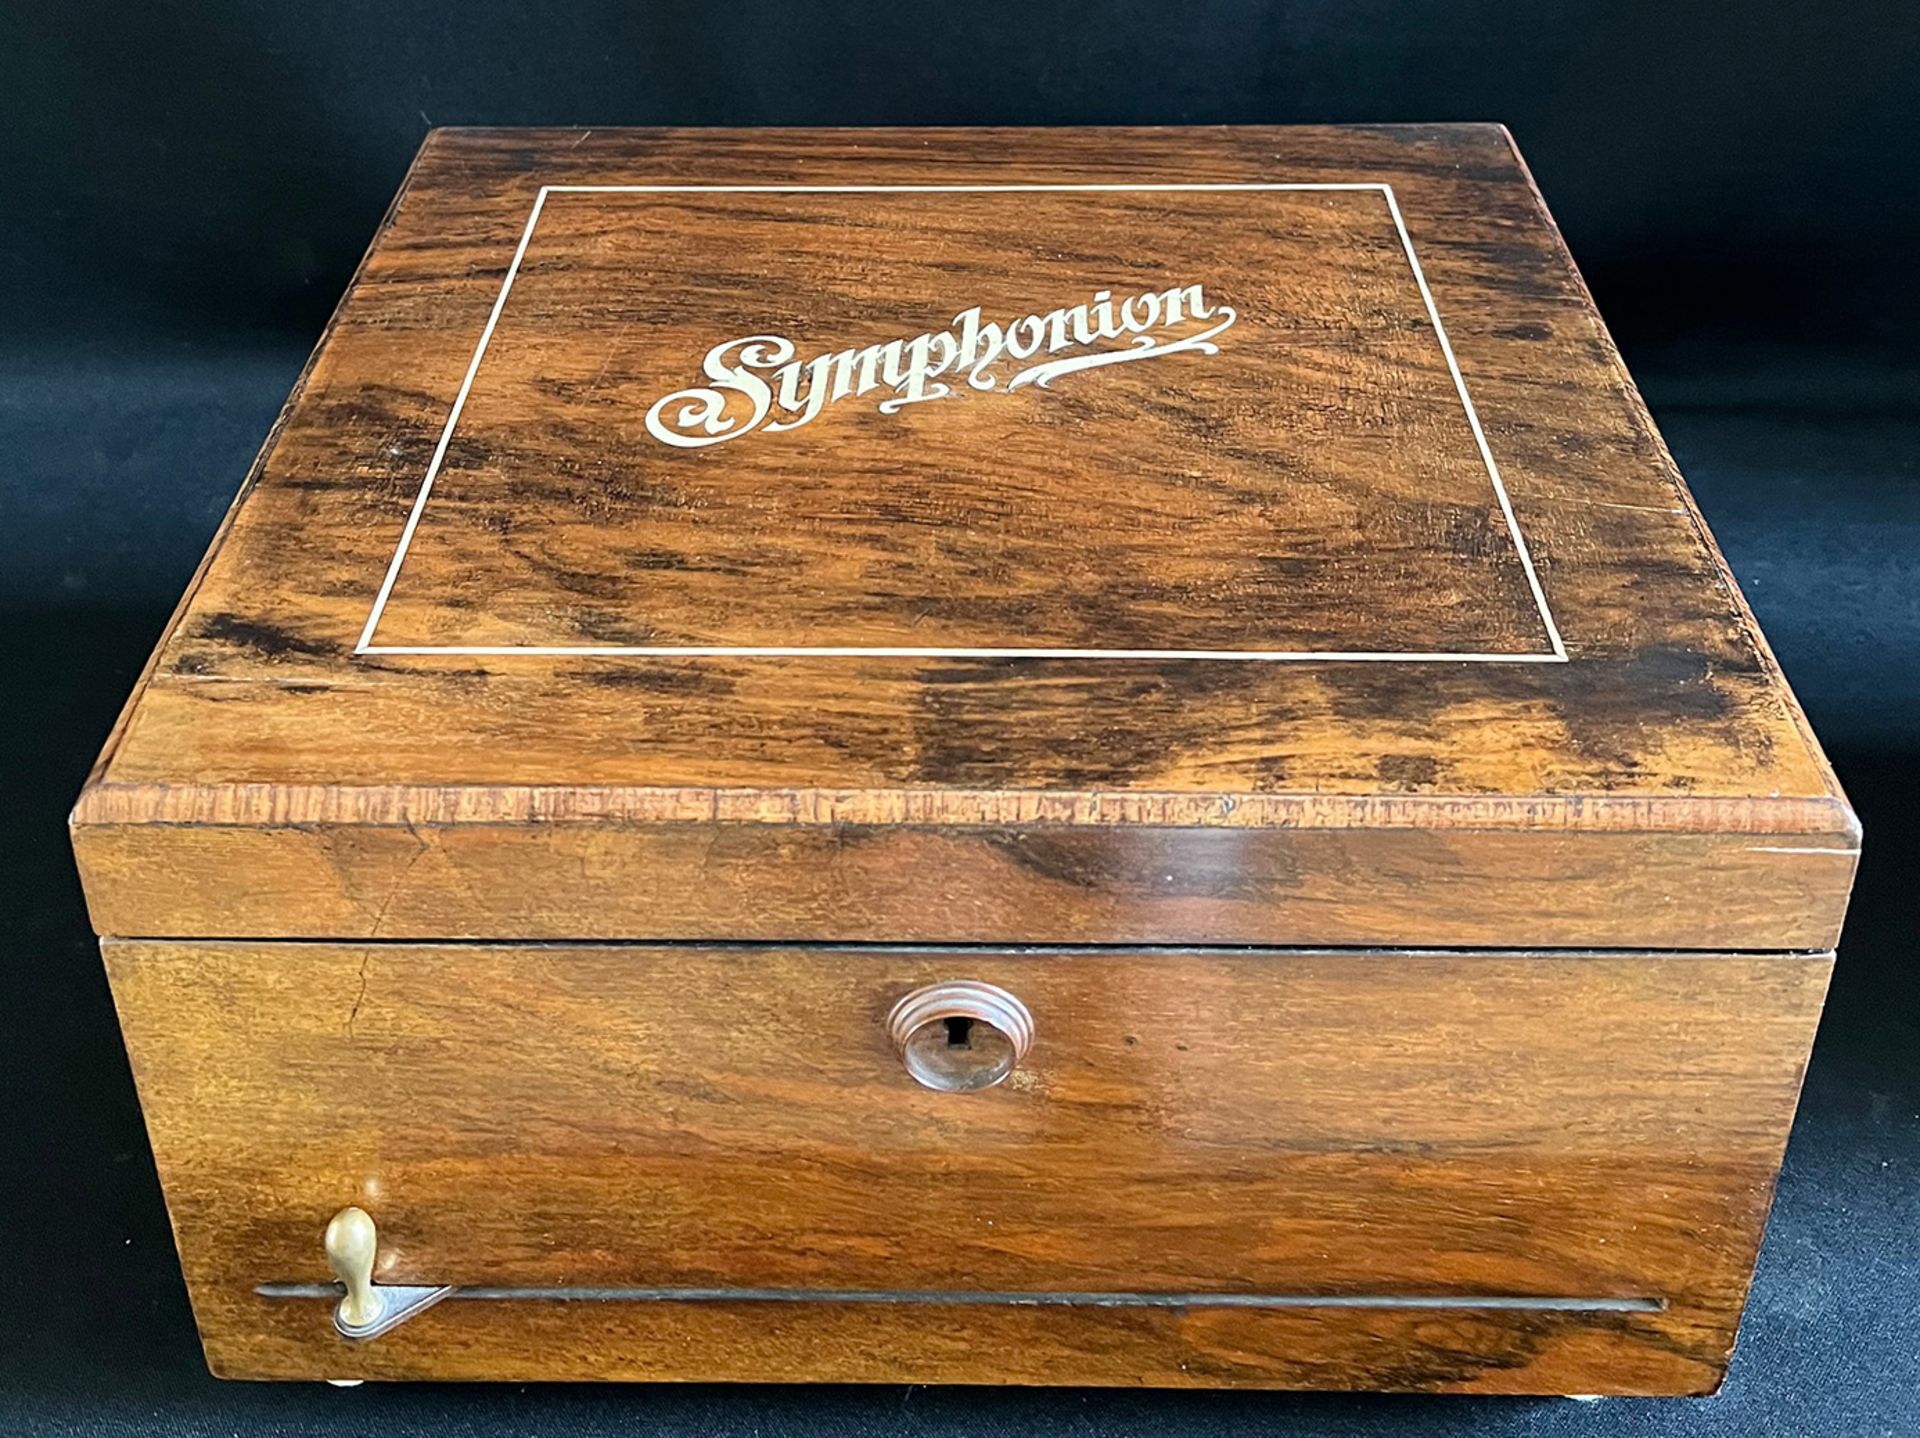 Symphonion im Holzkasten, Lochblechplattenspieluhr, Lochplattenspieler, um 1900, funktionstüchtig, - Bild 2 aus 6